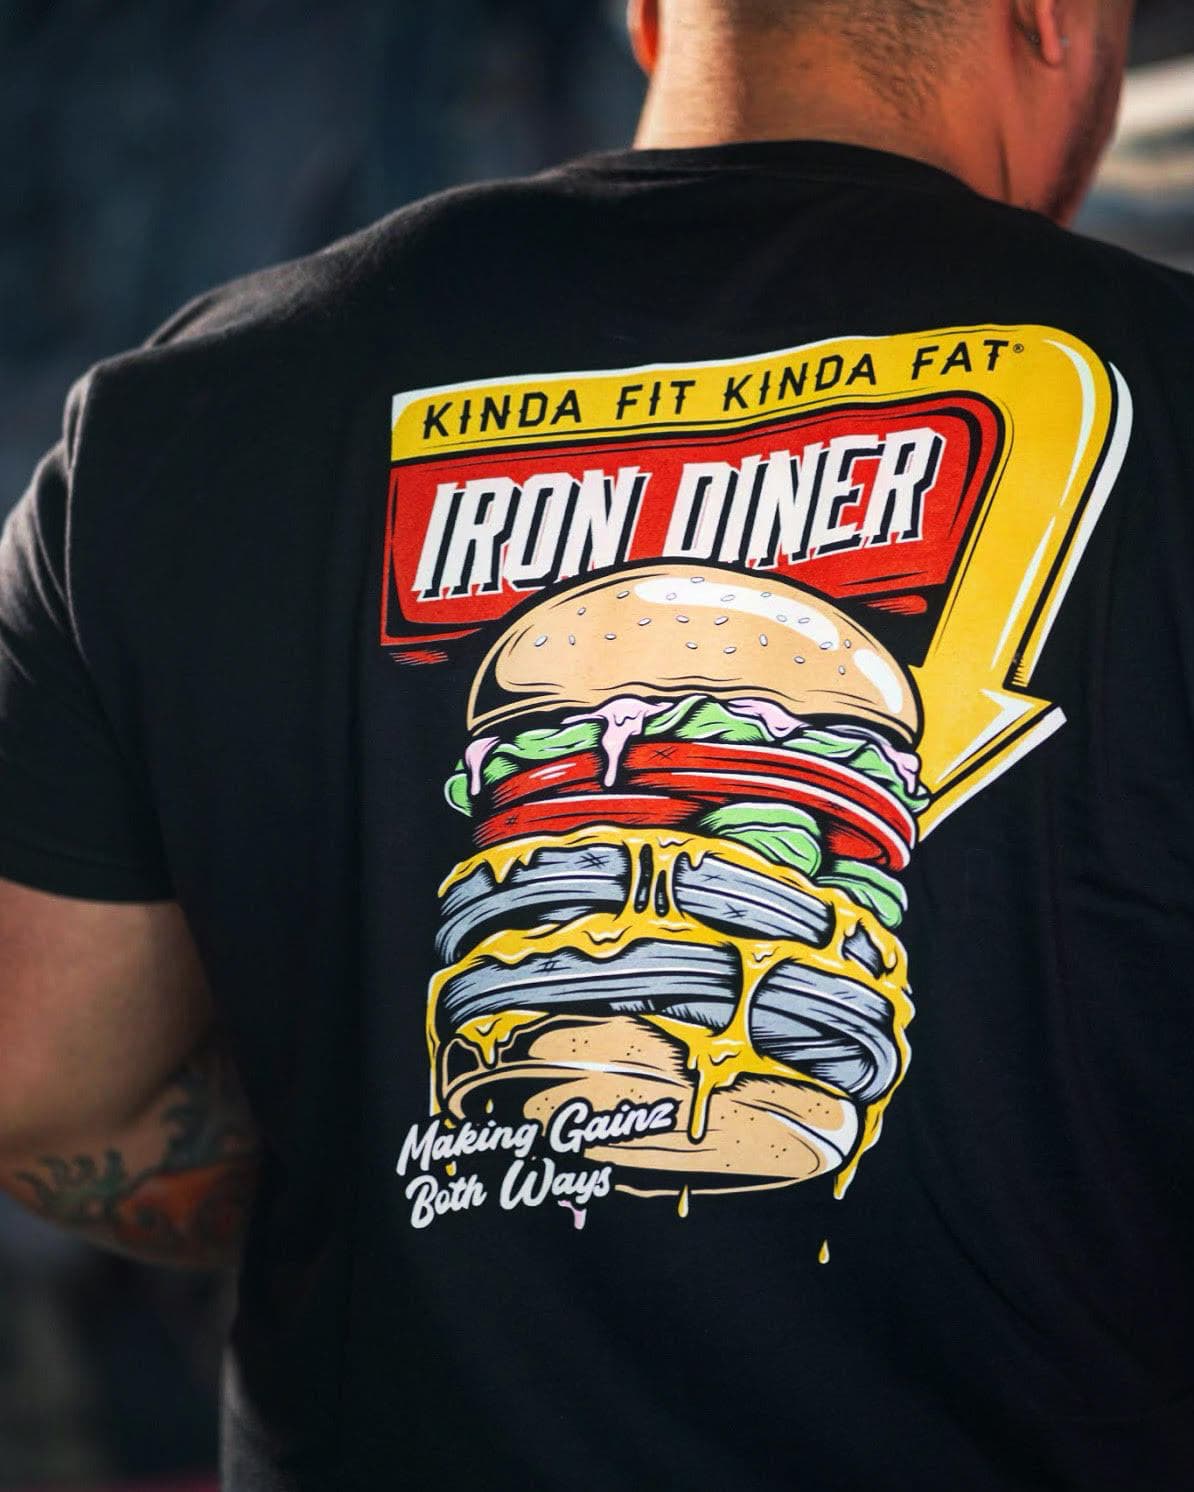 Kinda Fit Kinda Fat "Iron Diner" Burger Tee - 9 for 9